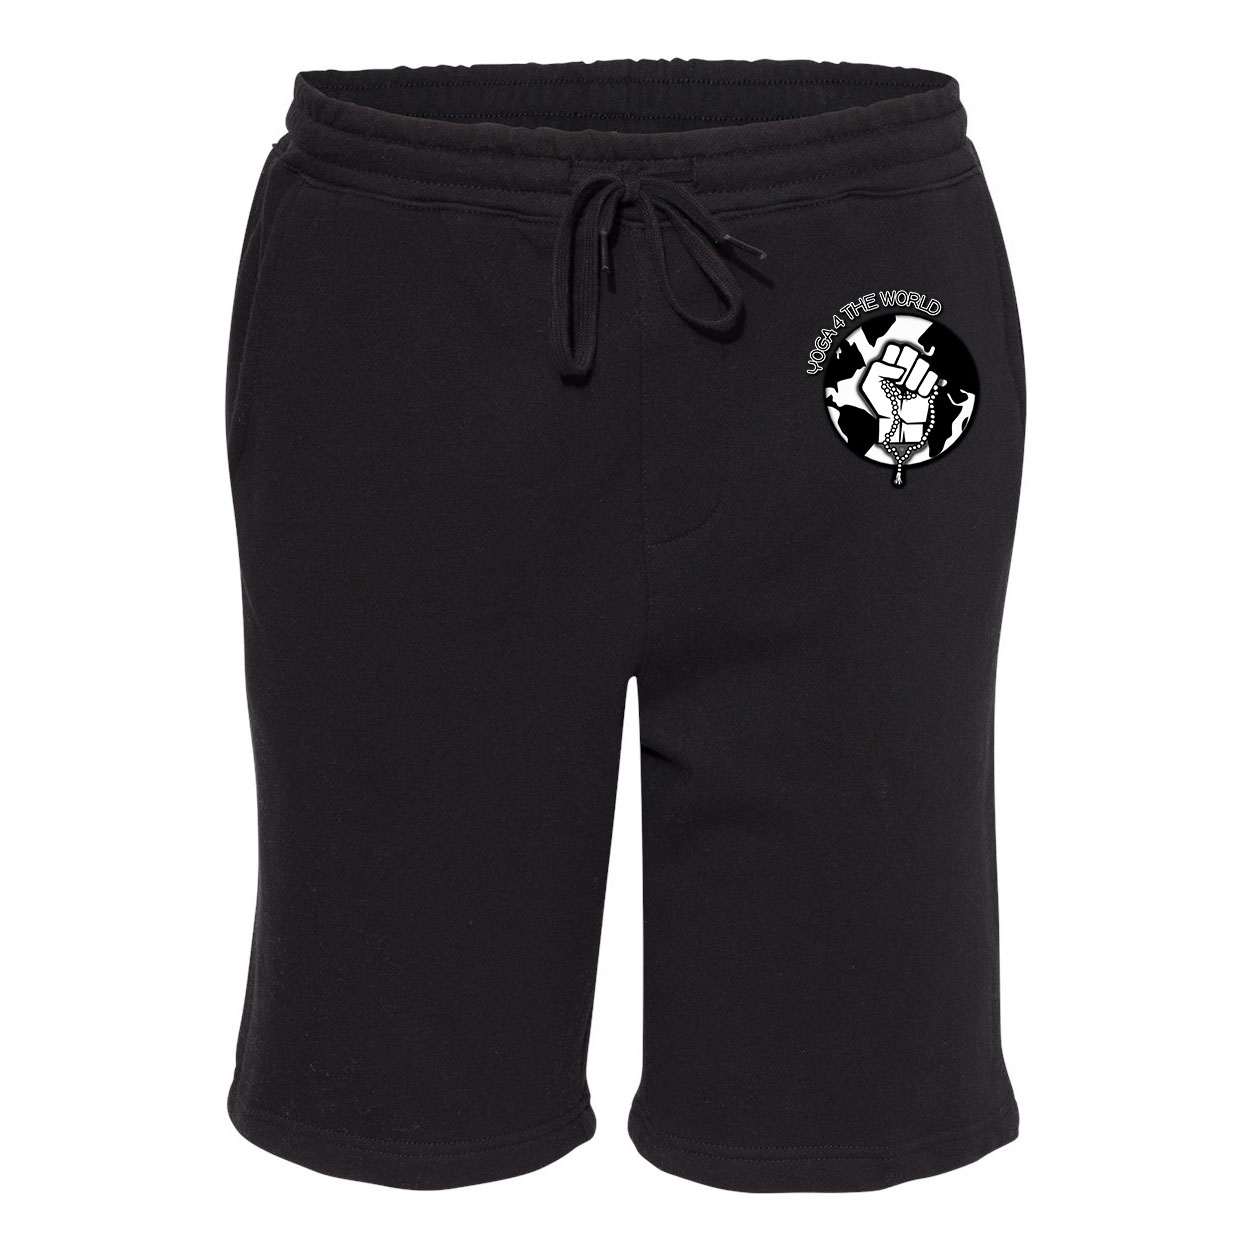 Yoga4TheWorld Black Fleece Shorts